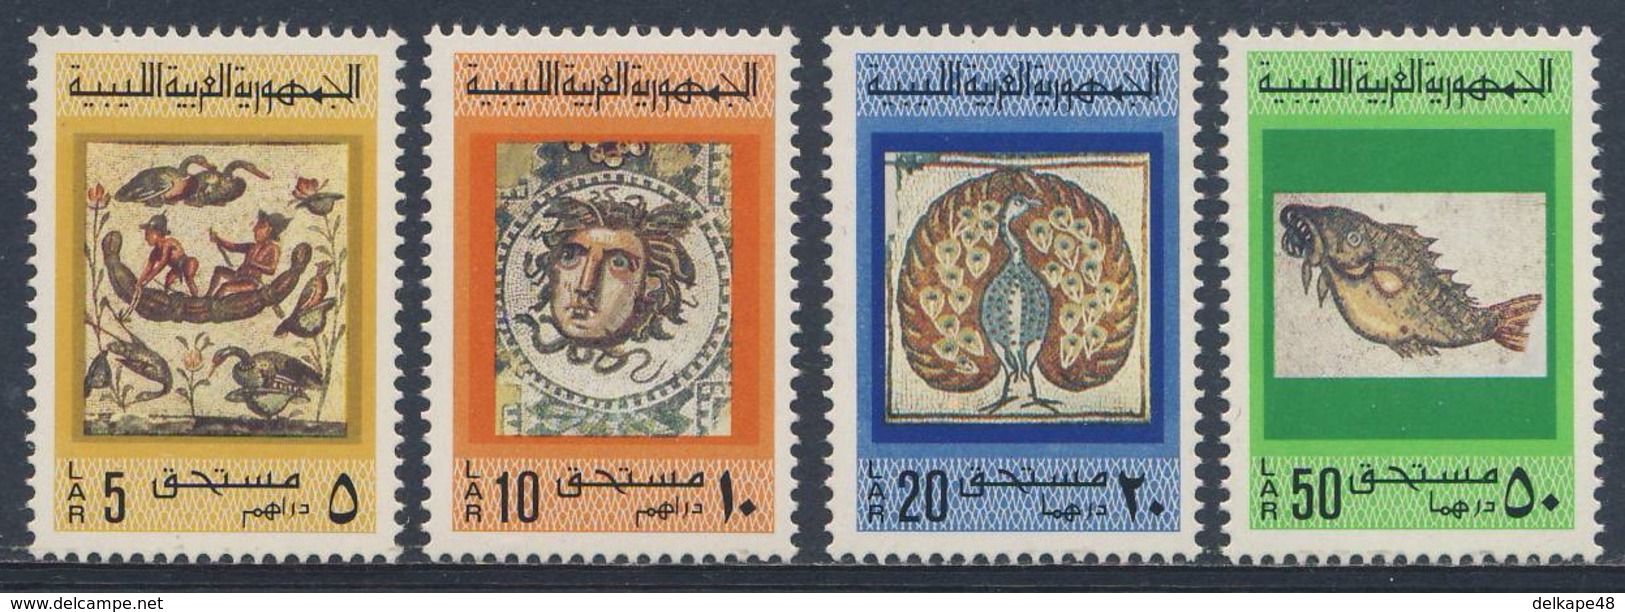 Libya Libie Libyen 1976 Mi 21 /4 YT T56 /9 SG D725 /8 ** Ancient Roman Mosaics / Alte Mosaikarbeiten / Mosaïques Romaine - Archeologia